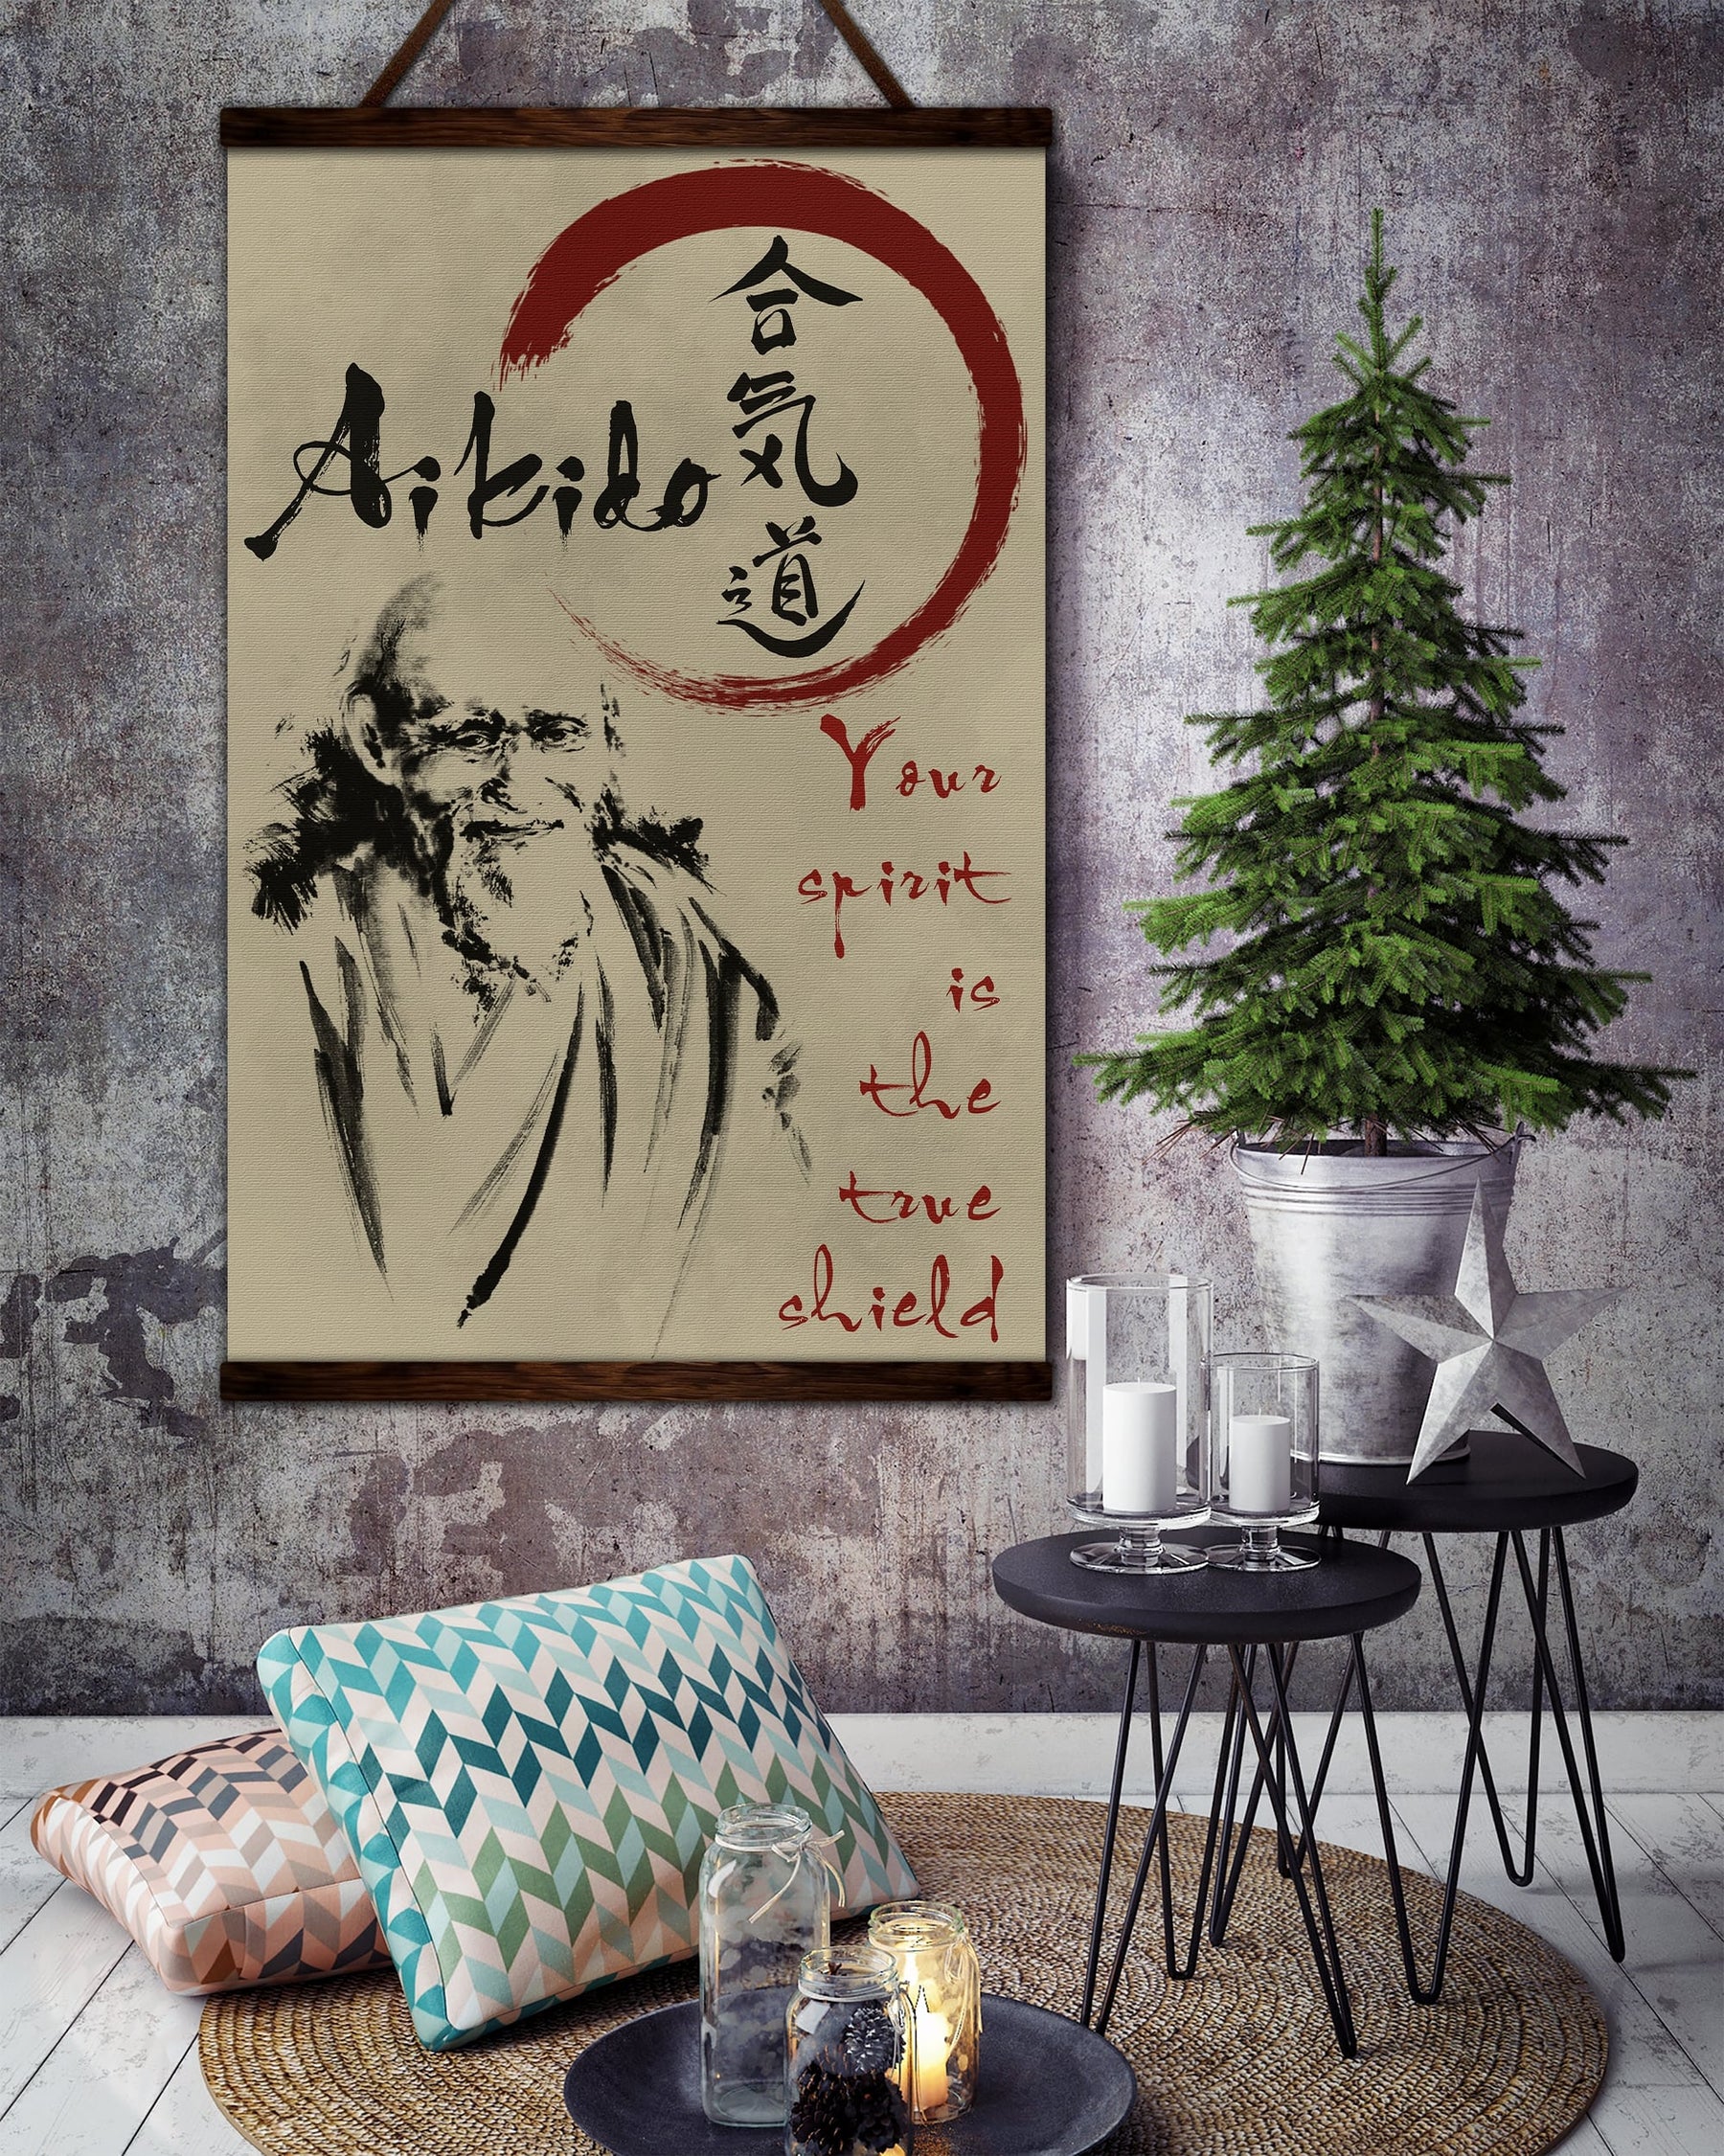 AI026 - Your Spirit Is The True Shield - Morihei Ueshiba - Vertical Poster - Vertical Canvas - Aikido Poster